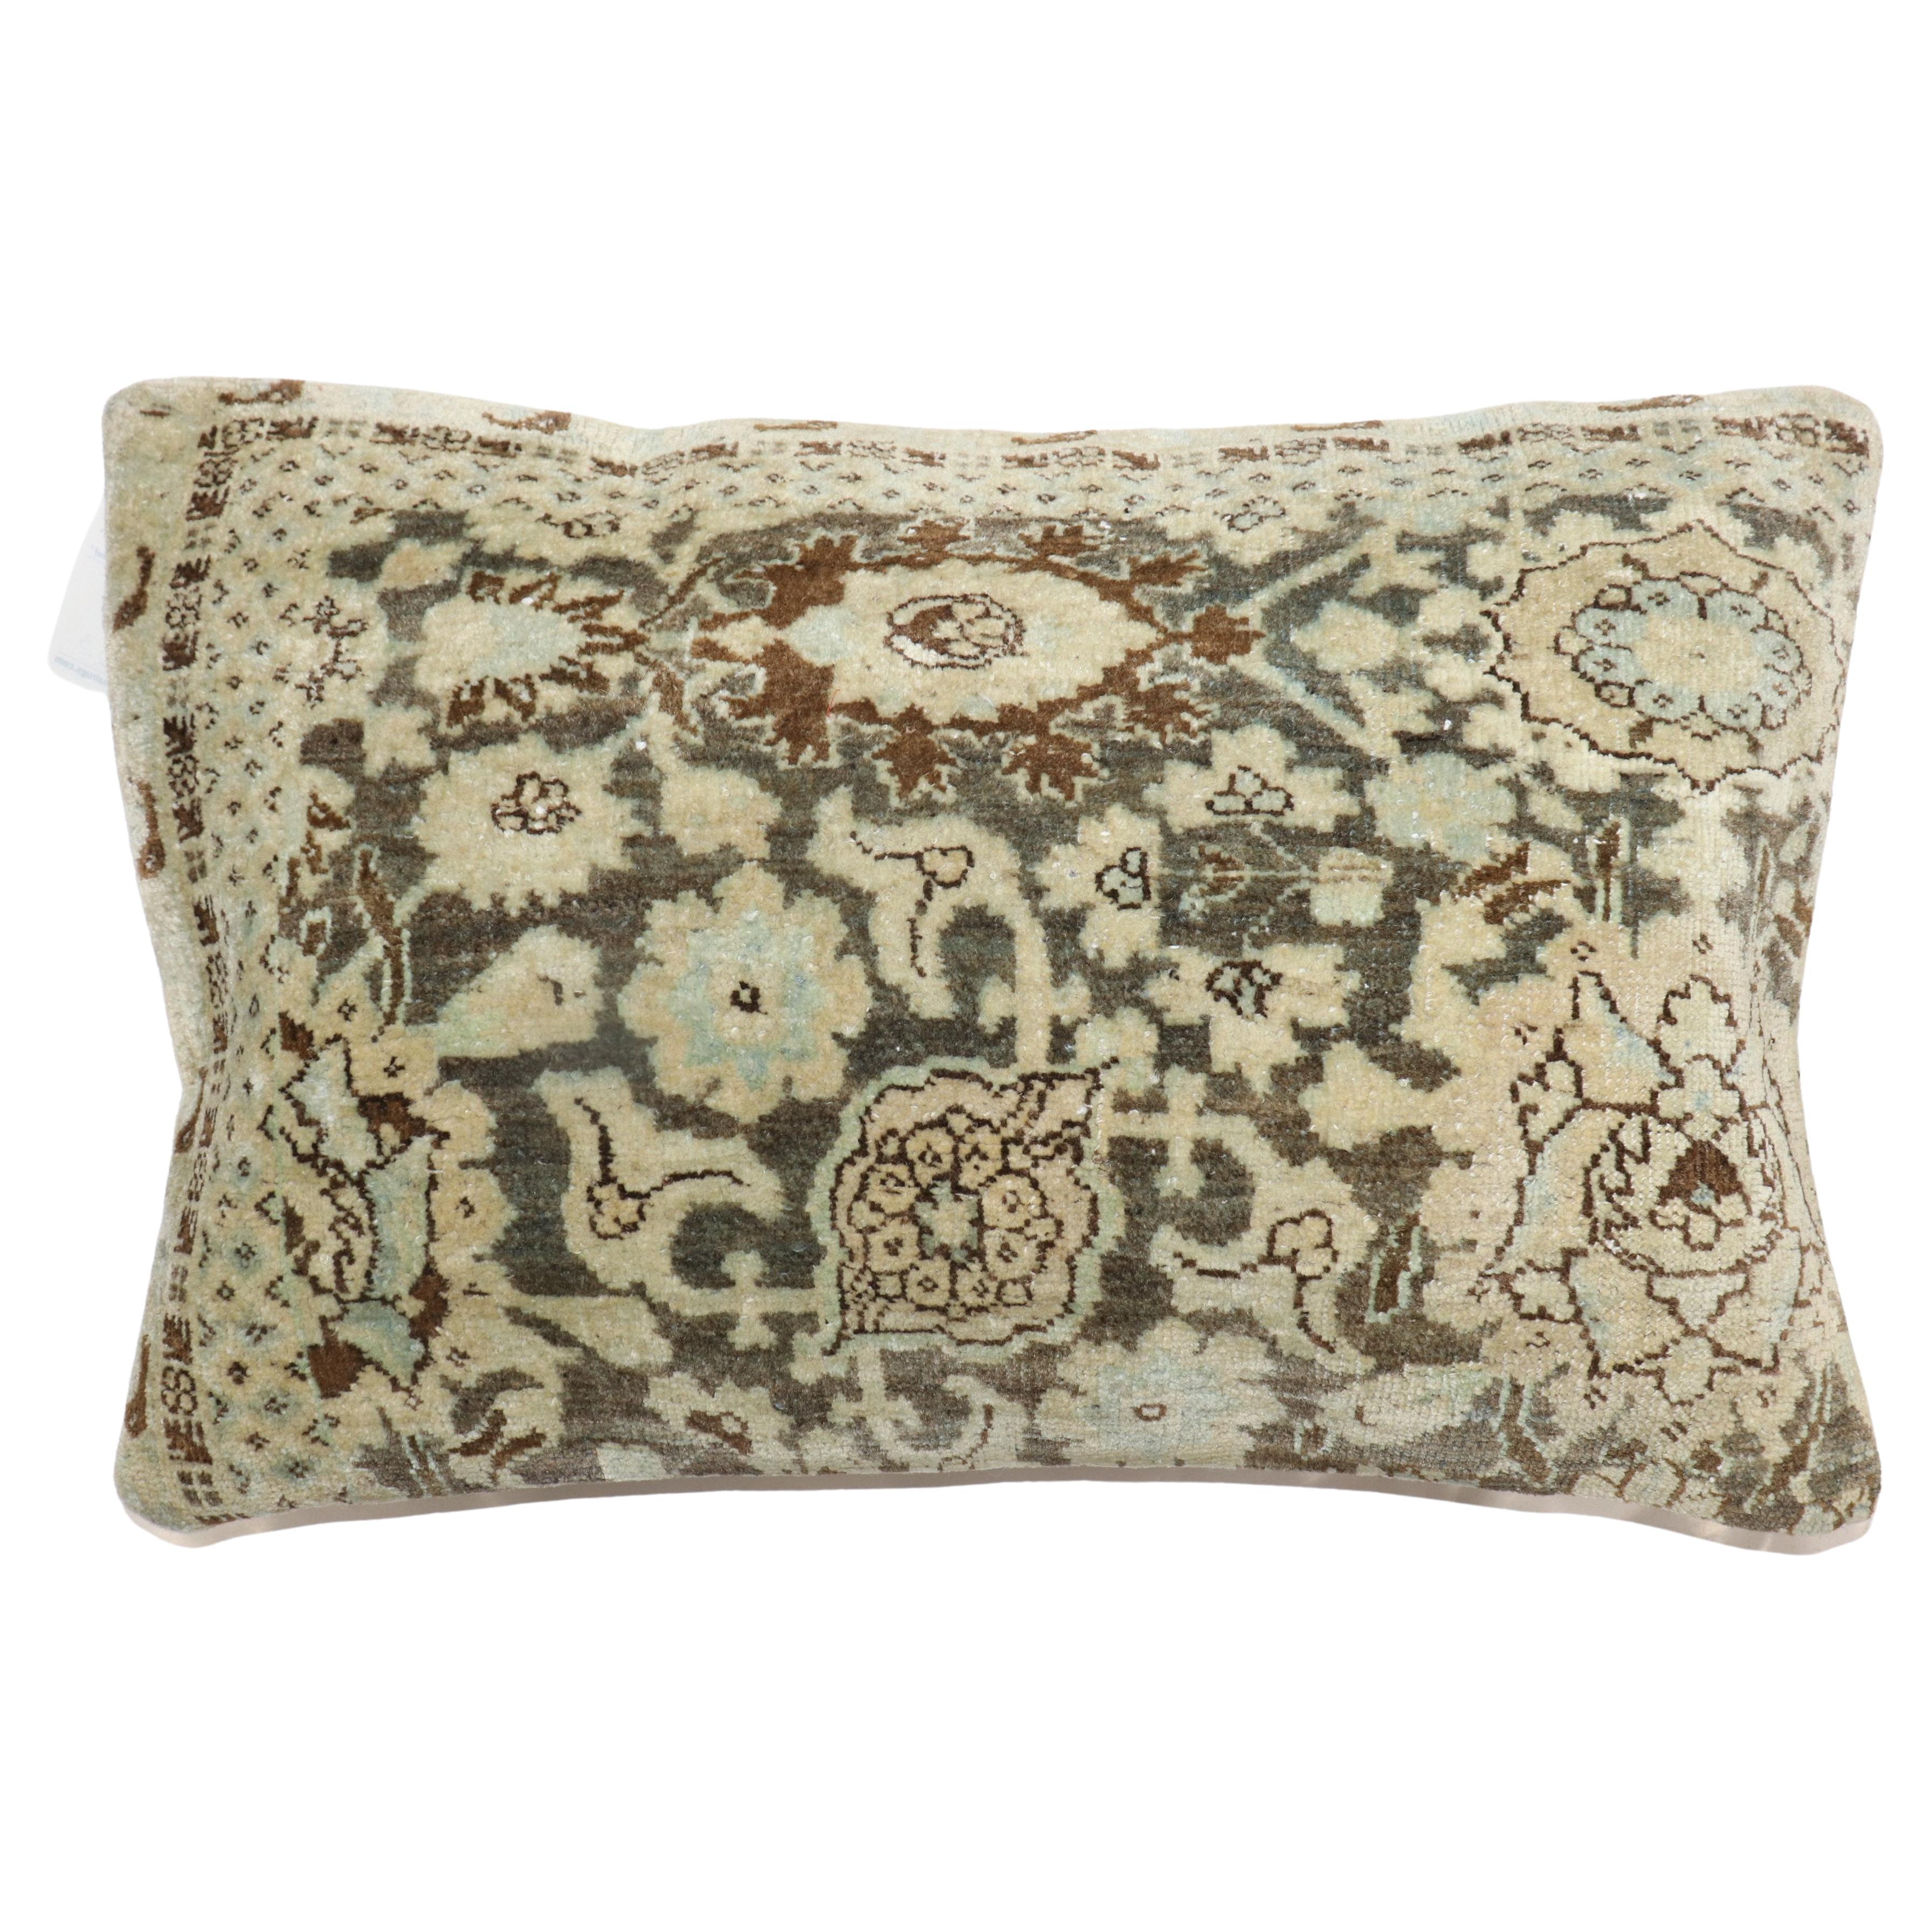 Large Persian Antique Rug Pillow